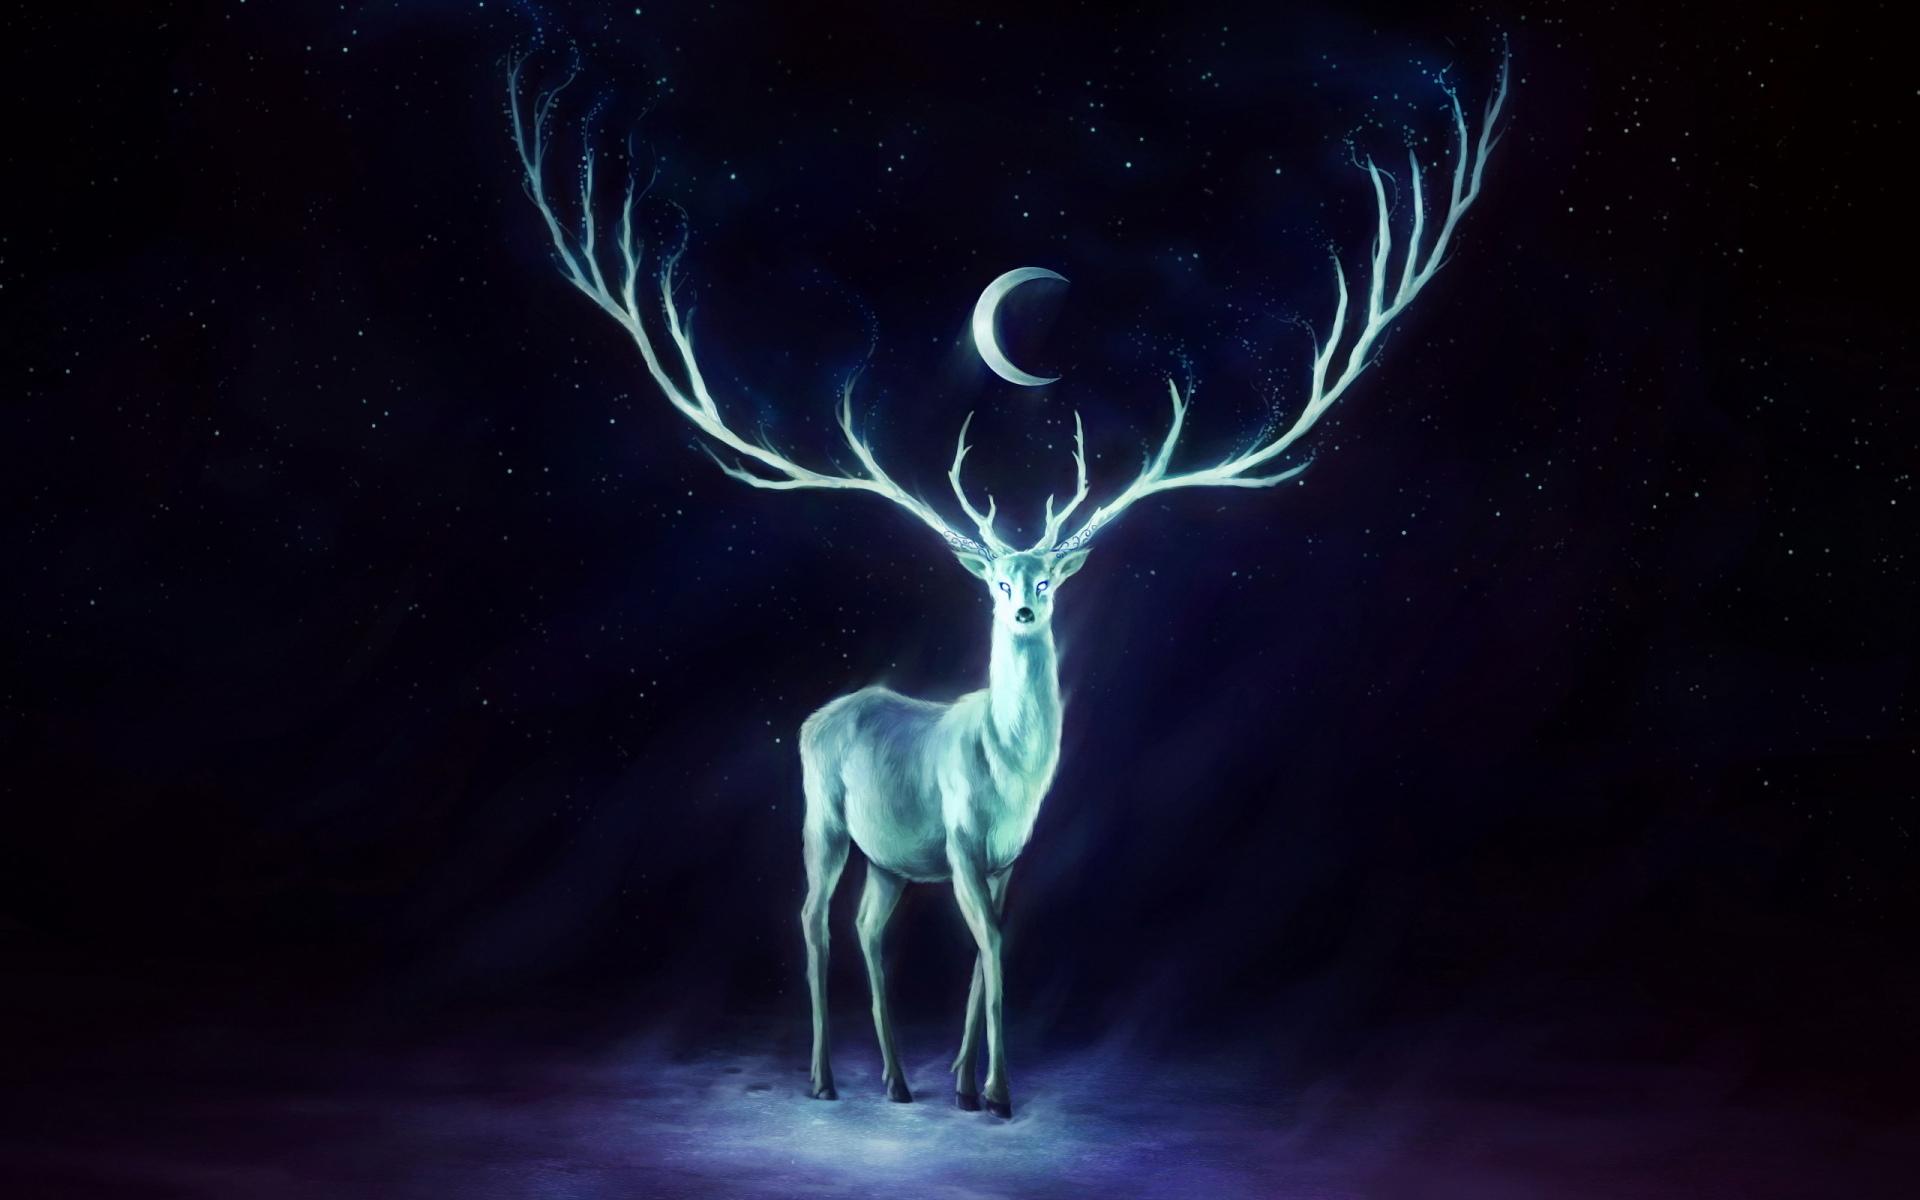 Deer Fantasy wallpapers HD quality